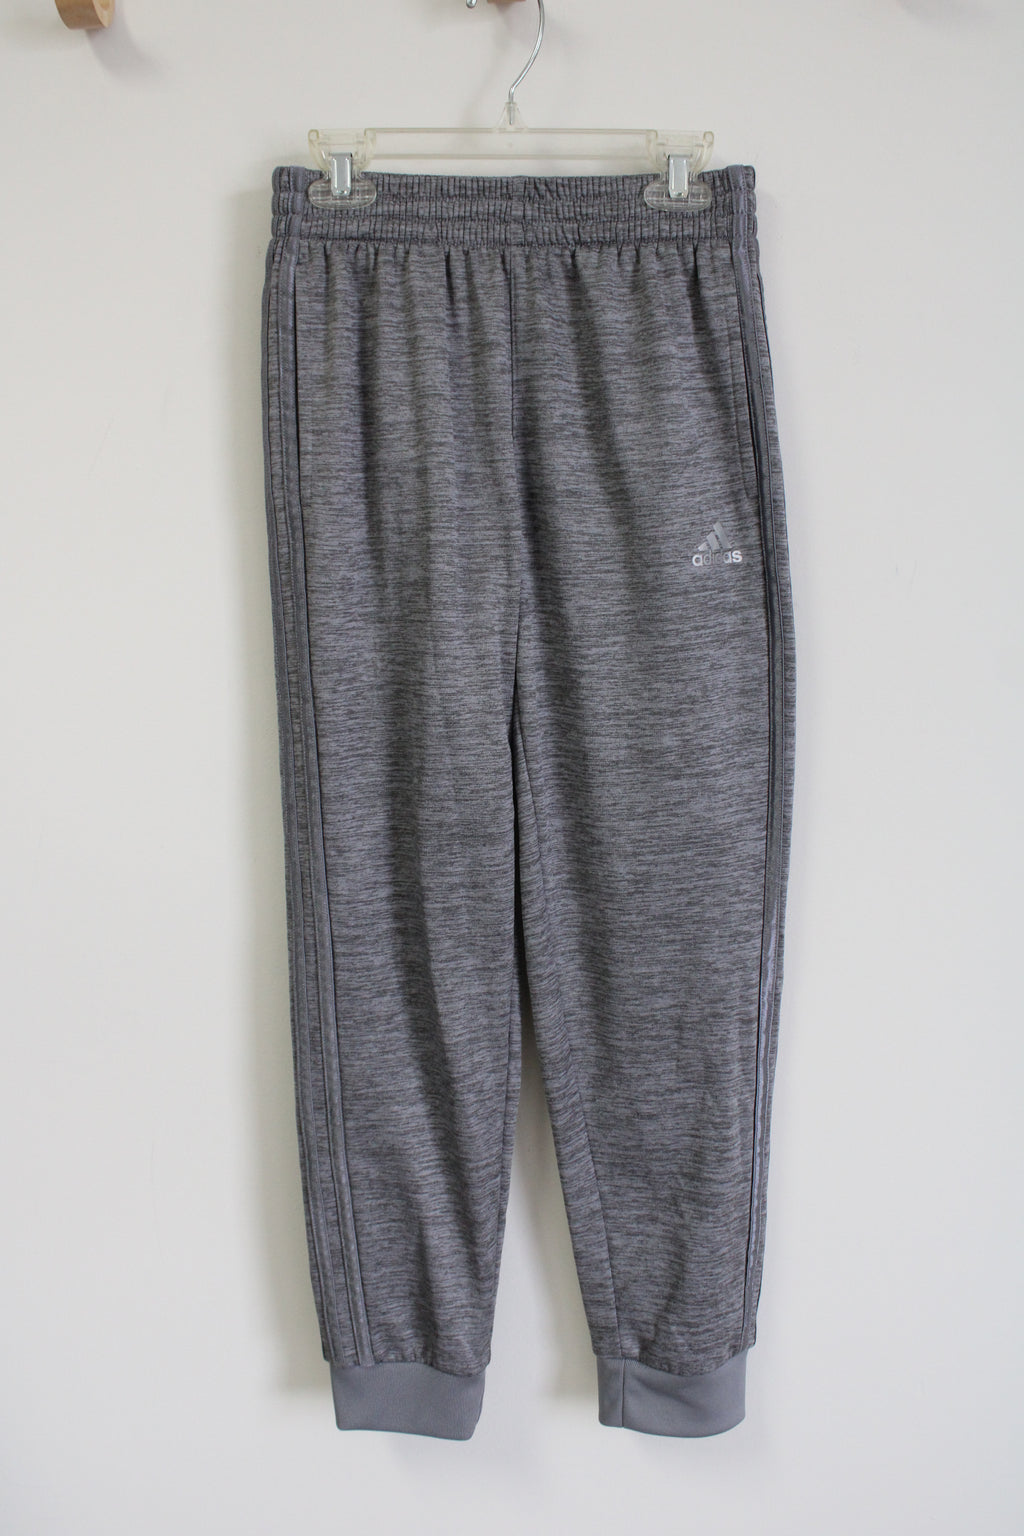 Adidas Gray Fleece Lined Jogger | Youth M (10/12)